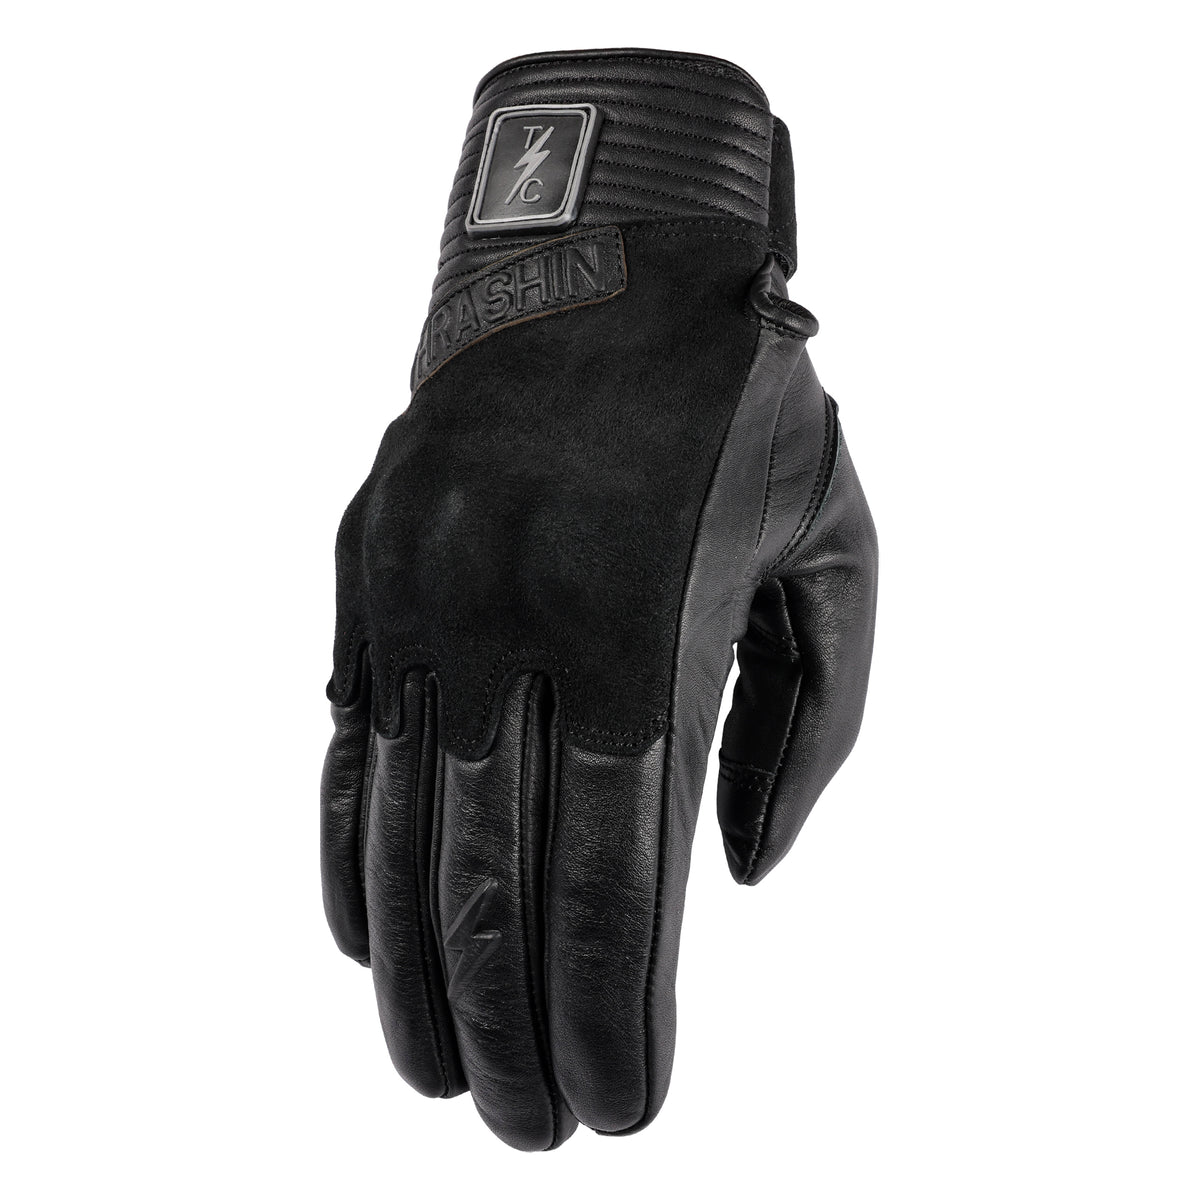 Boxer Glove - Black